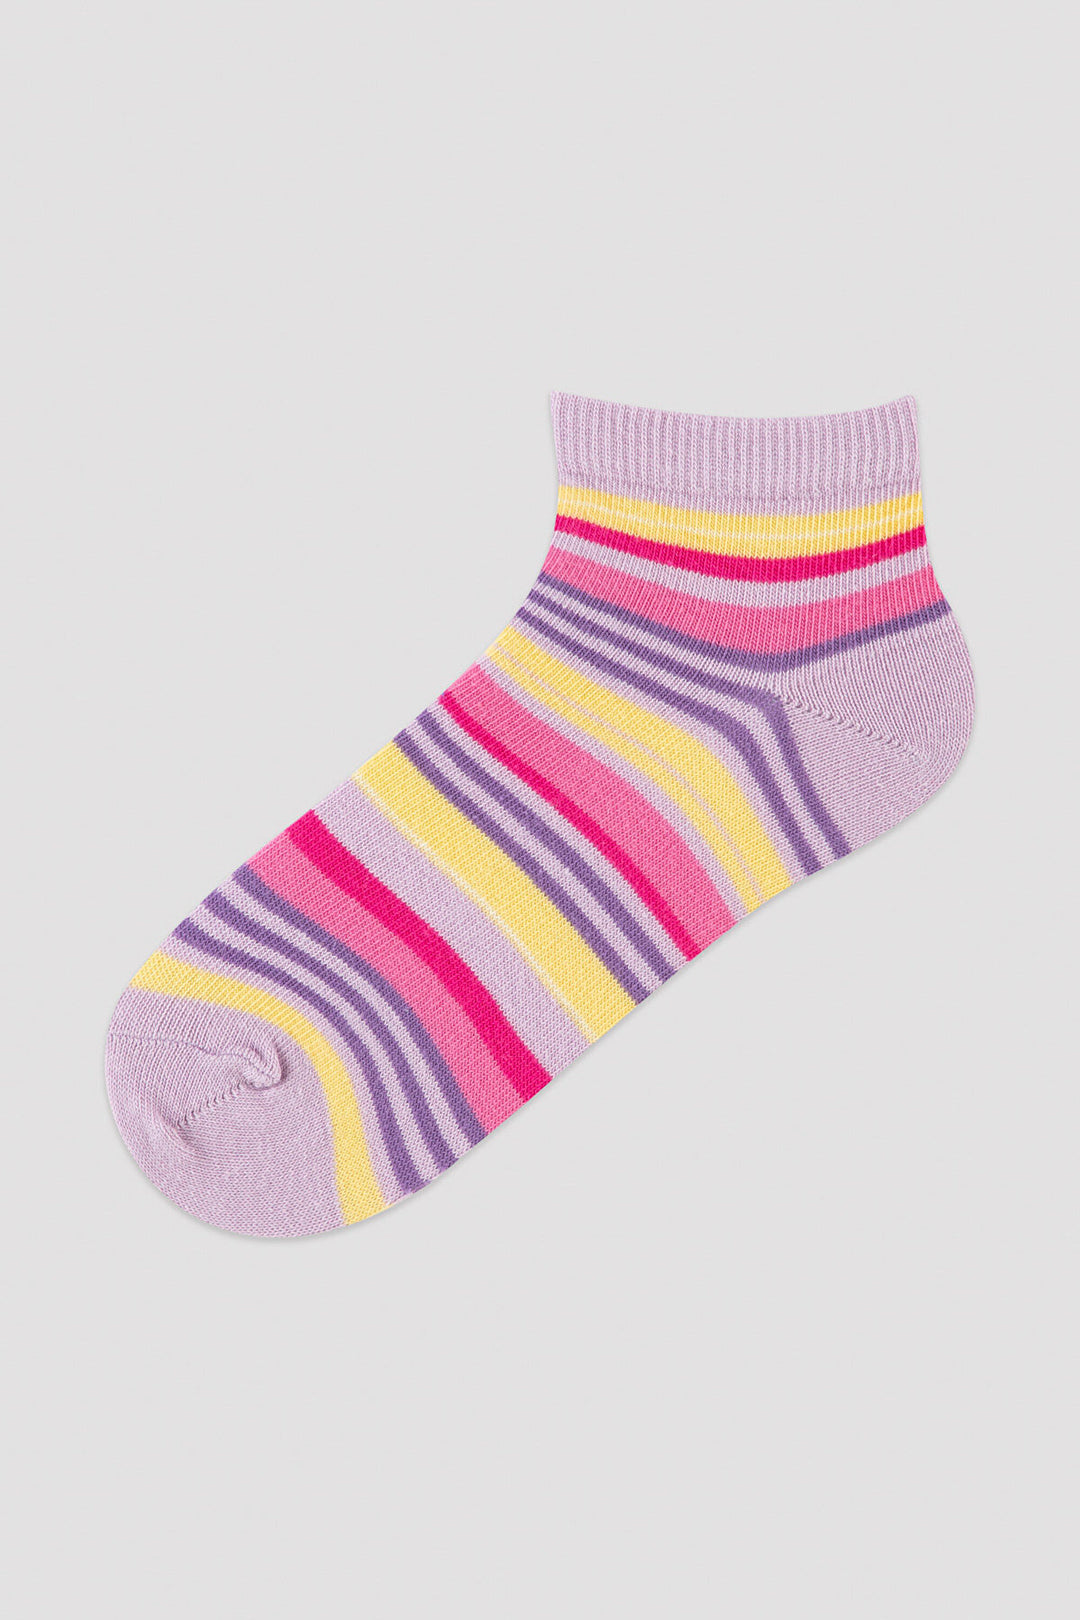 Girls Pinkness Stripe 4in1 Footsies